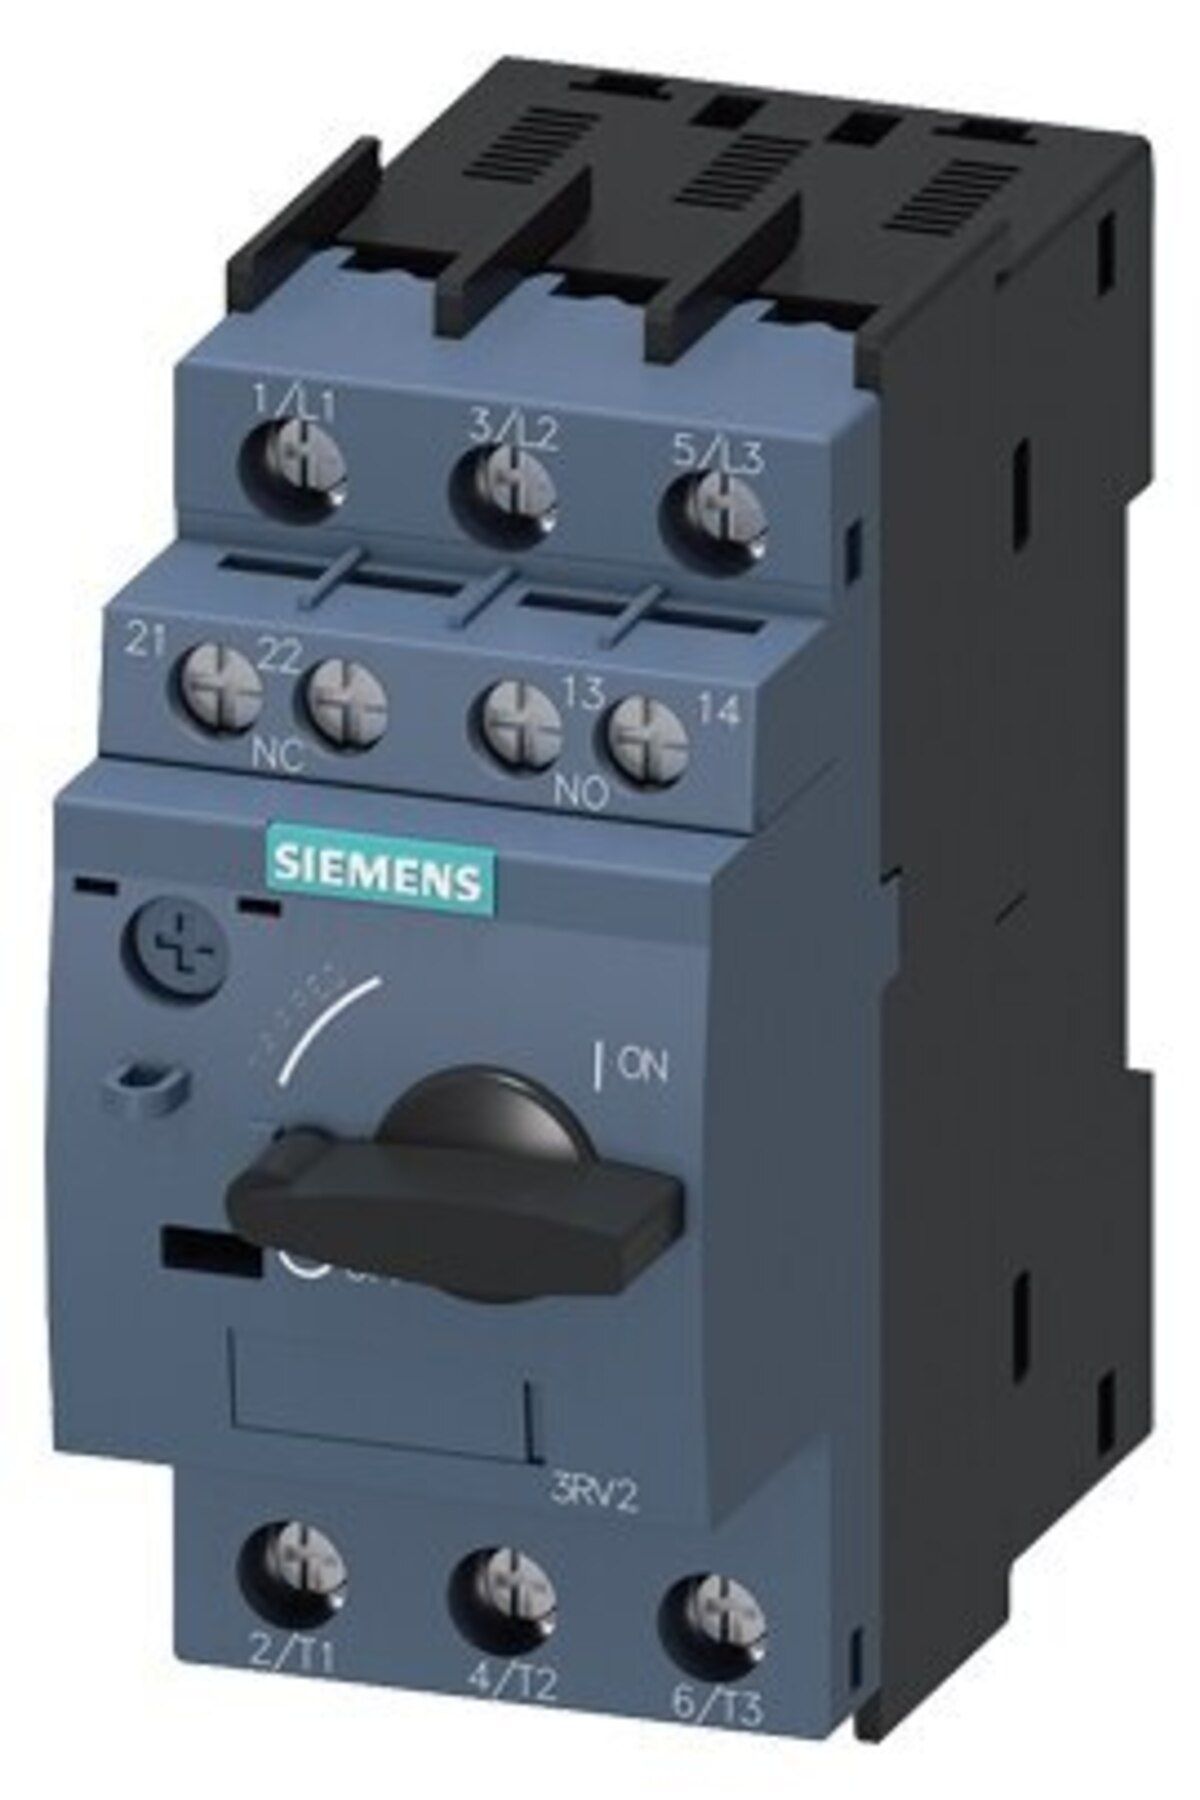 Siemens 7-10a 100ka S00 Boy Sırıus Motor Koruma Şalteri 60ºc Pano Içi Sıcaklıkta Bitişik Montaja